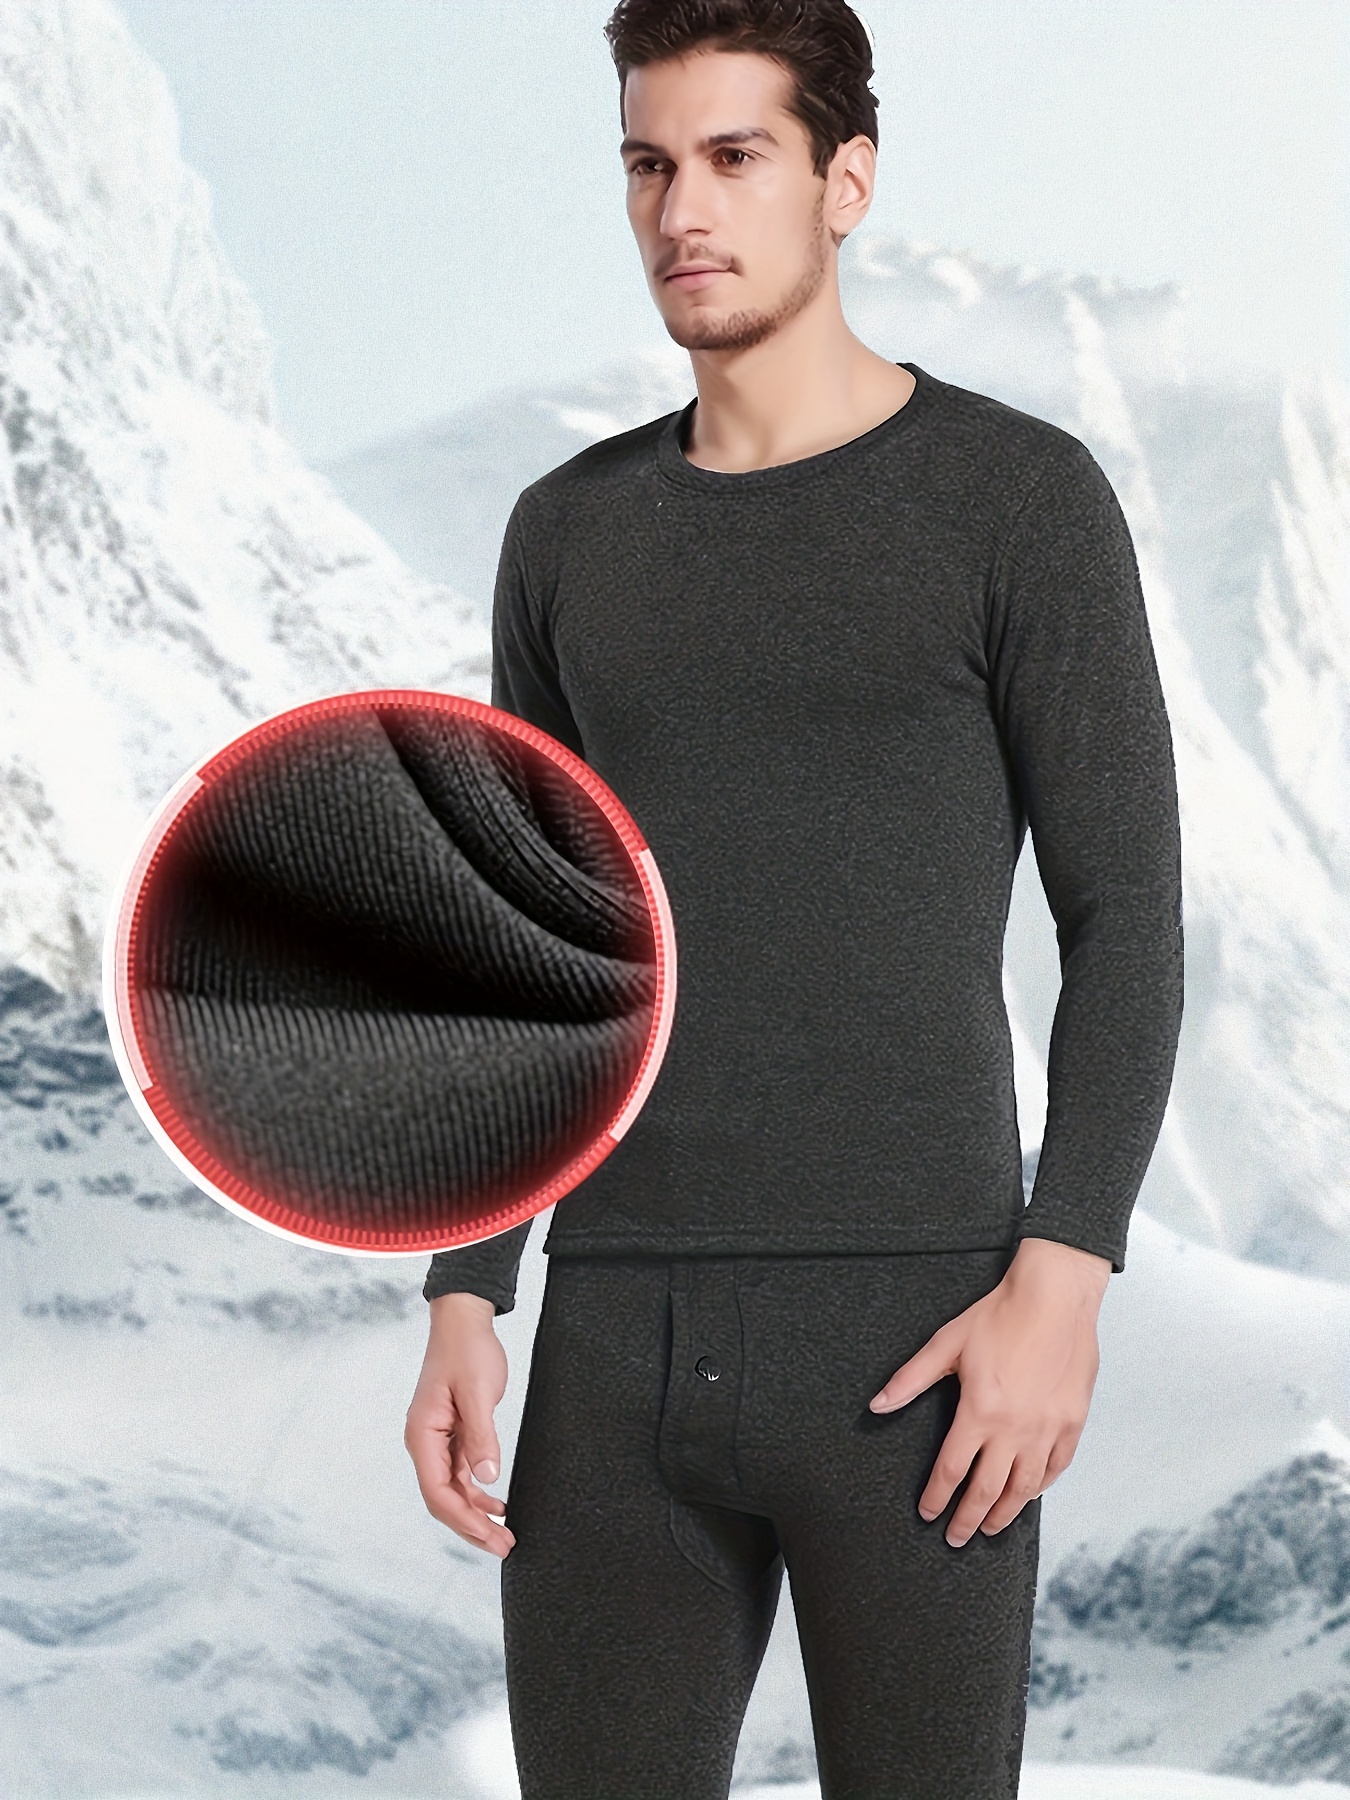 Mens Winter Warm Stretchy Thermal Underwear Bottom Long Johns